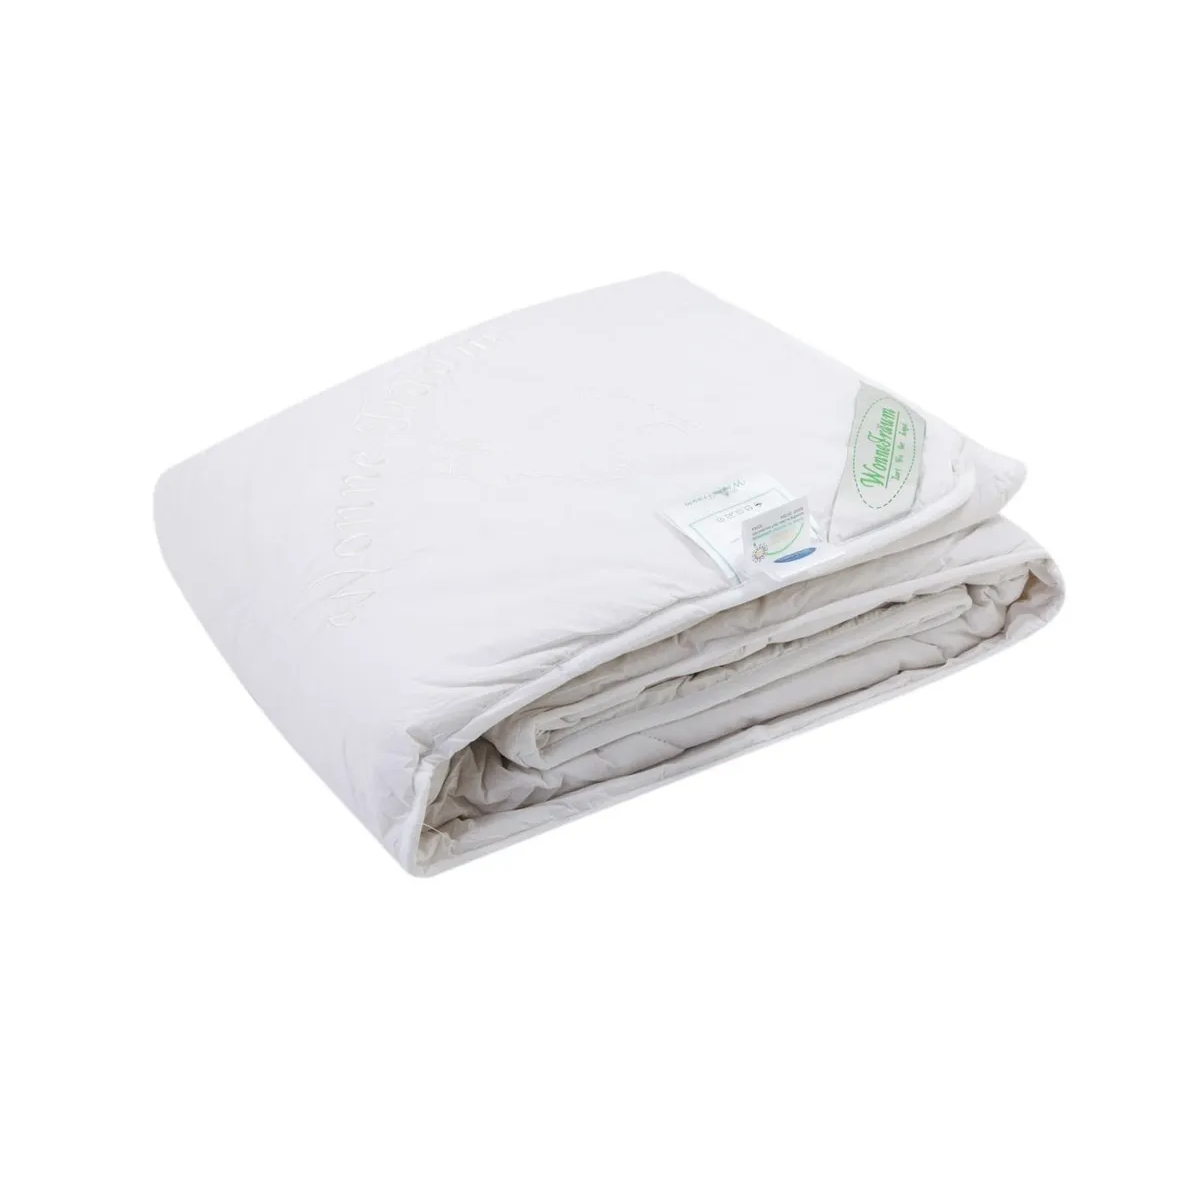 Одеяло шерстяное Wonne Traum белое 200х220 см (2709-26241) одеяло шерстяное wonne traum белое 200х220 см 2709 26241